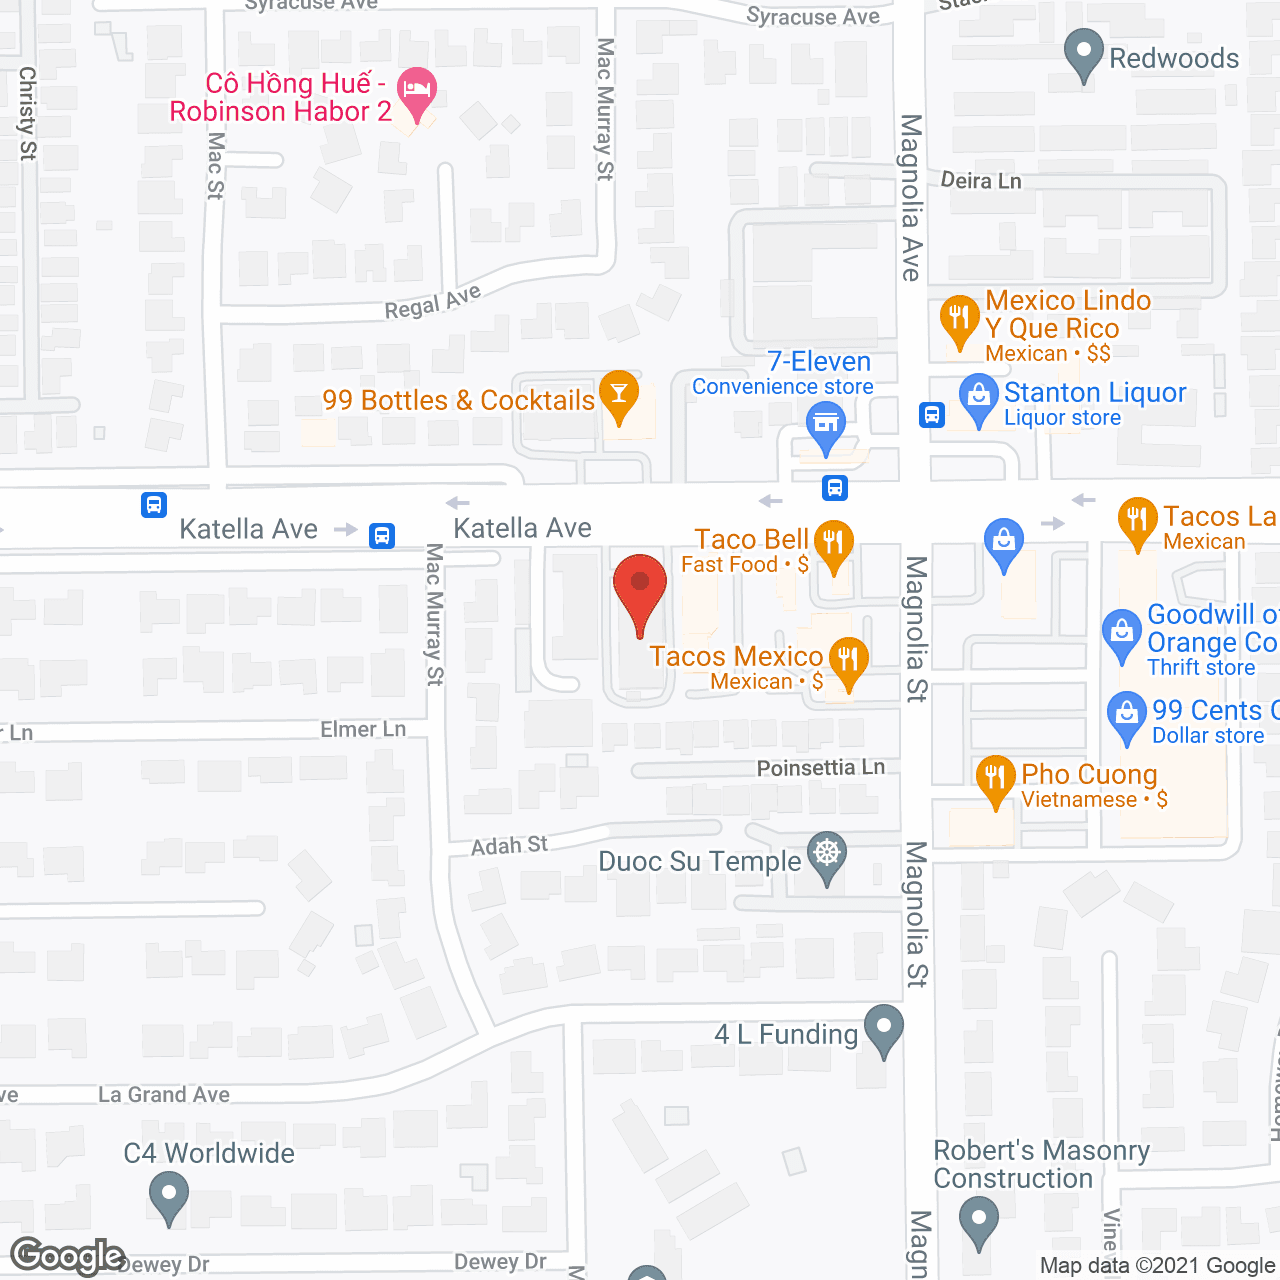 Chapman Guest Village in google map